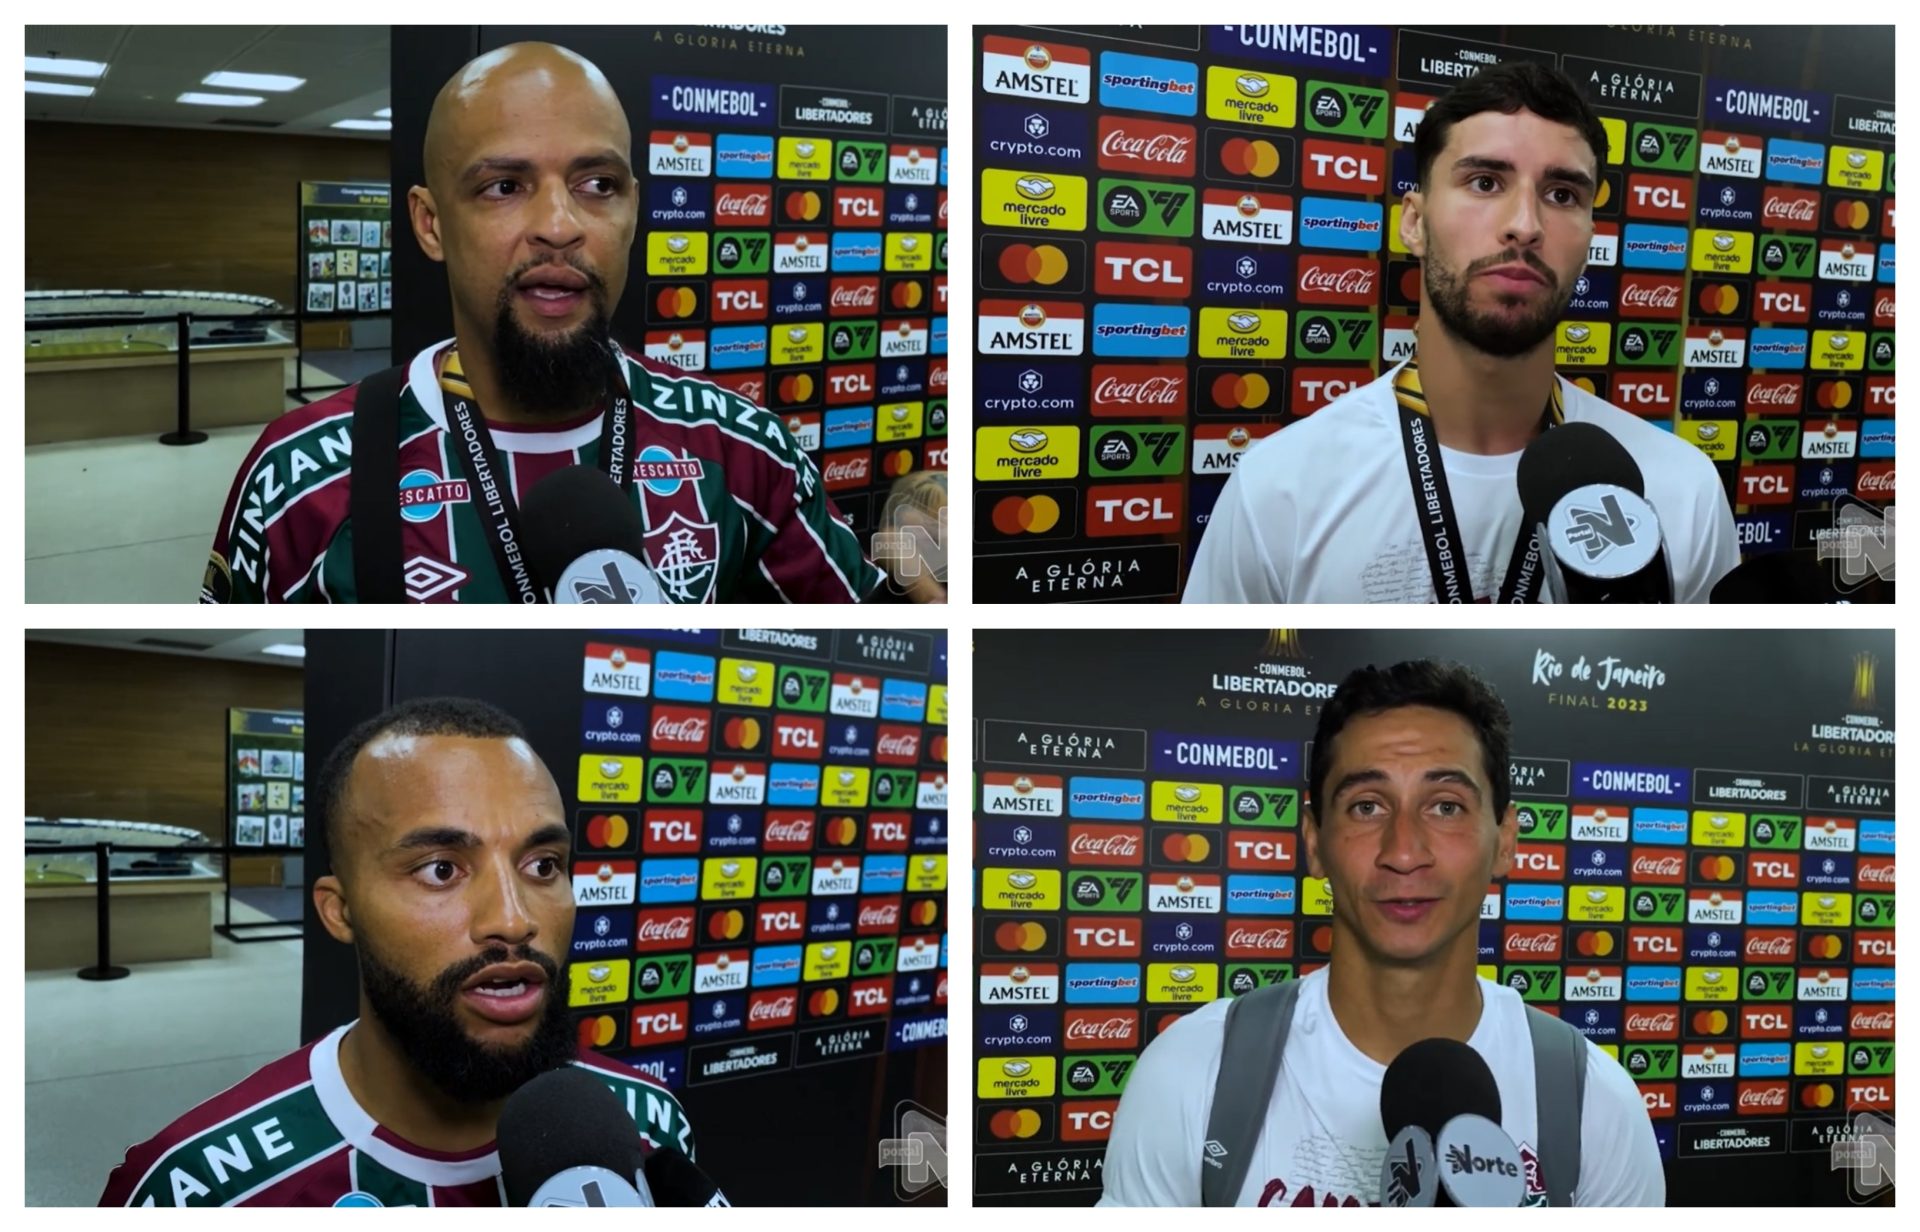 VÍDEO: Portal Norte conversa com atletas do Fluminense após conquista da Libertadores